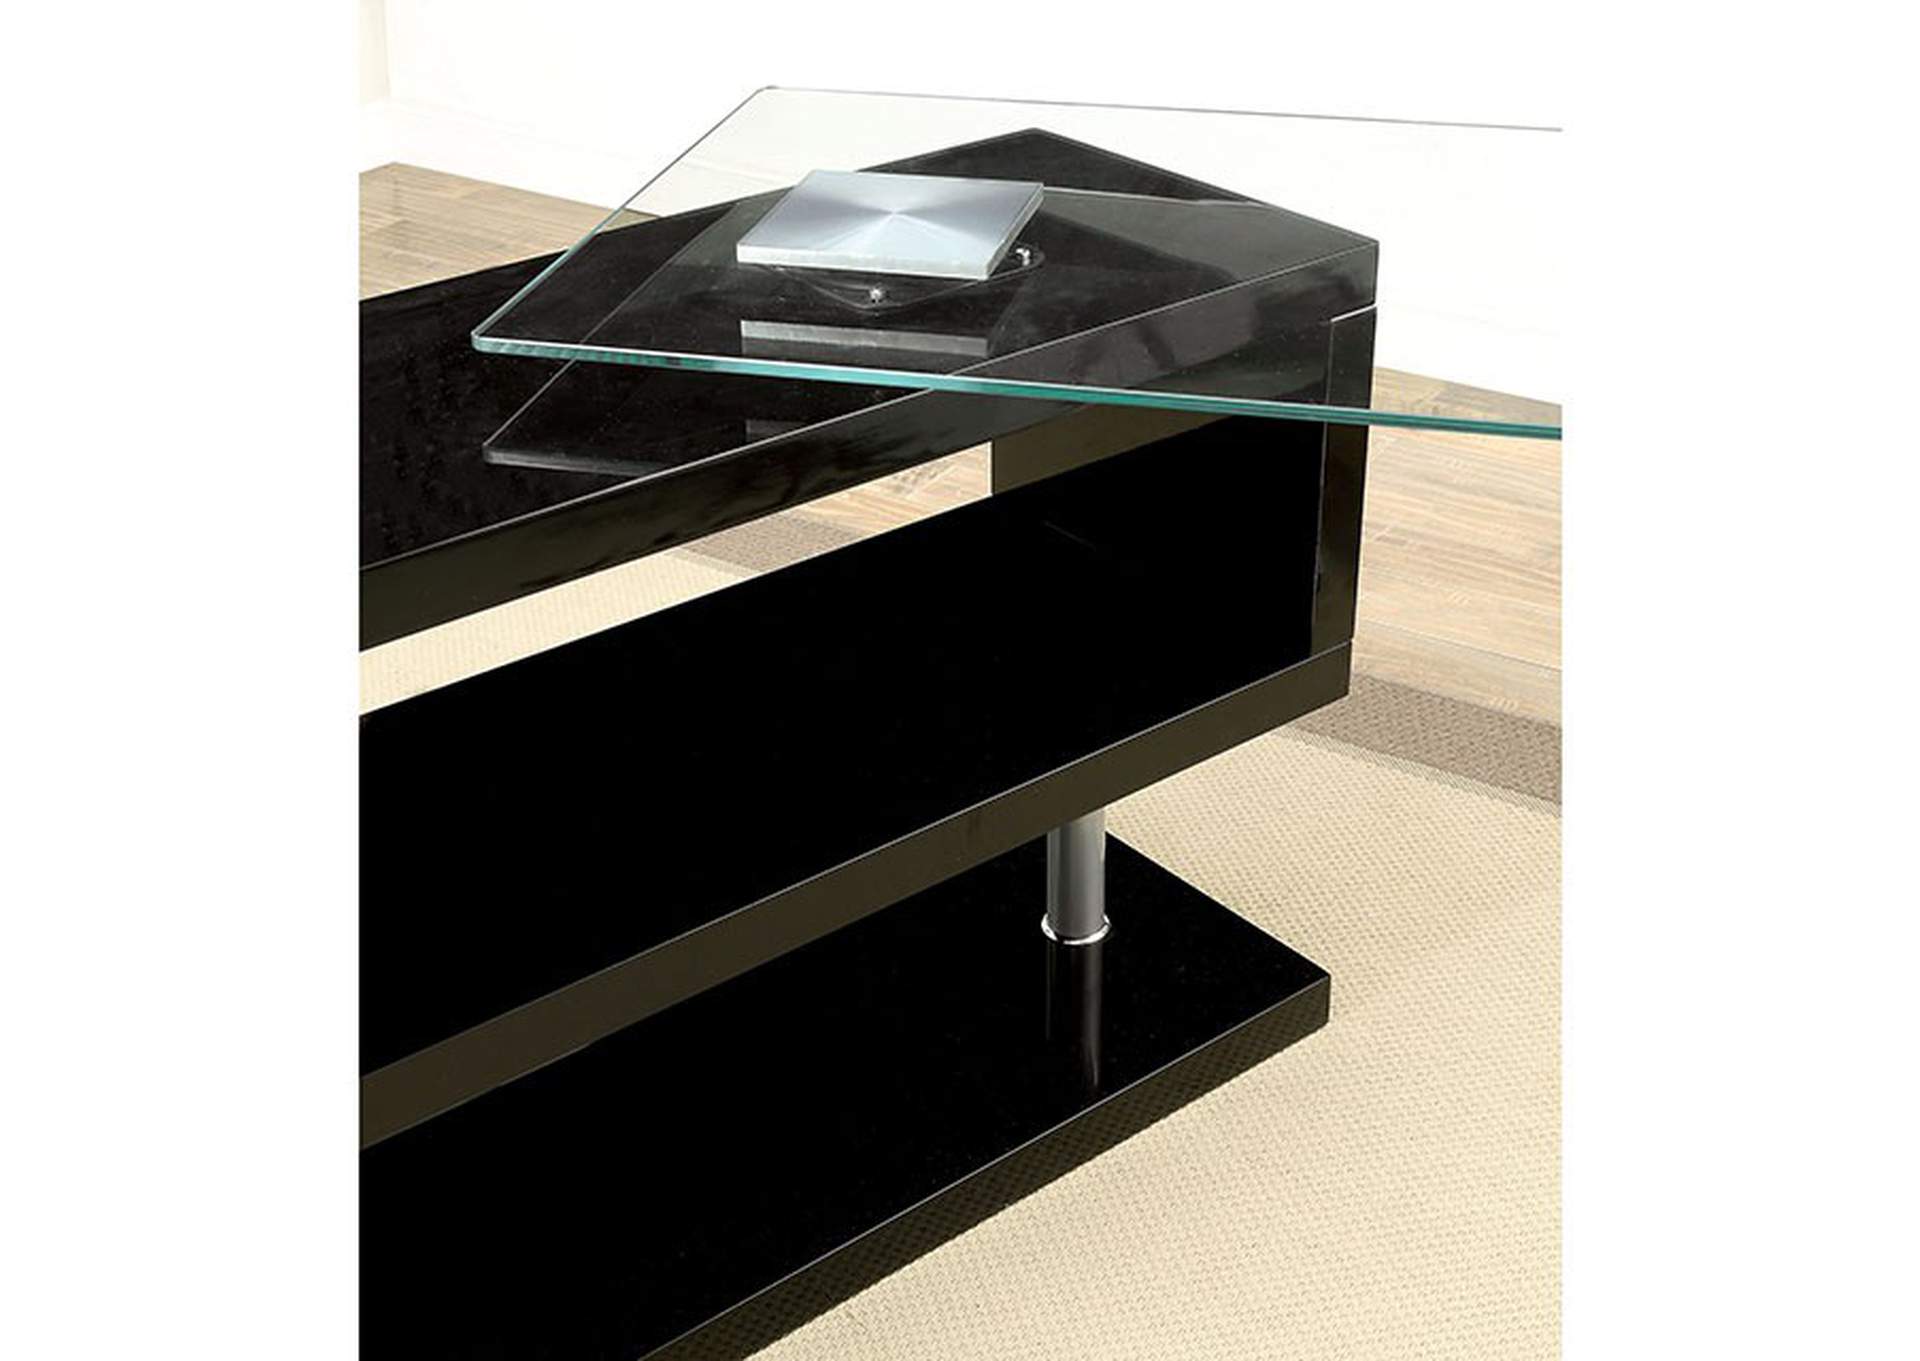 Bronwen Black Desk,Furniture of America TX